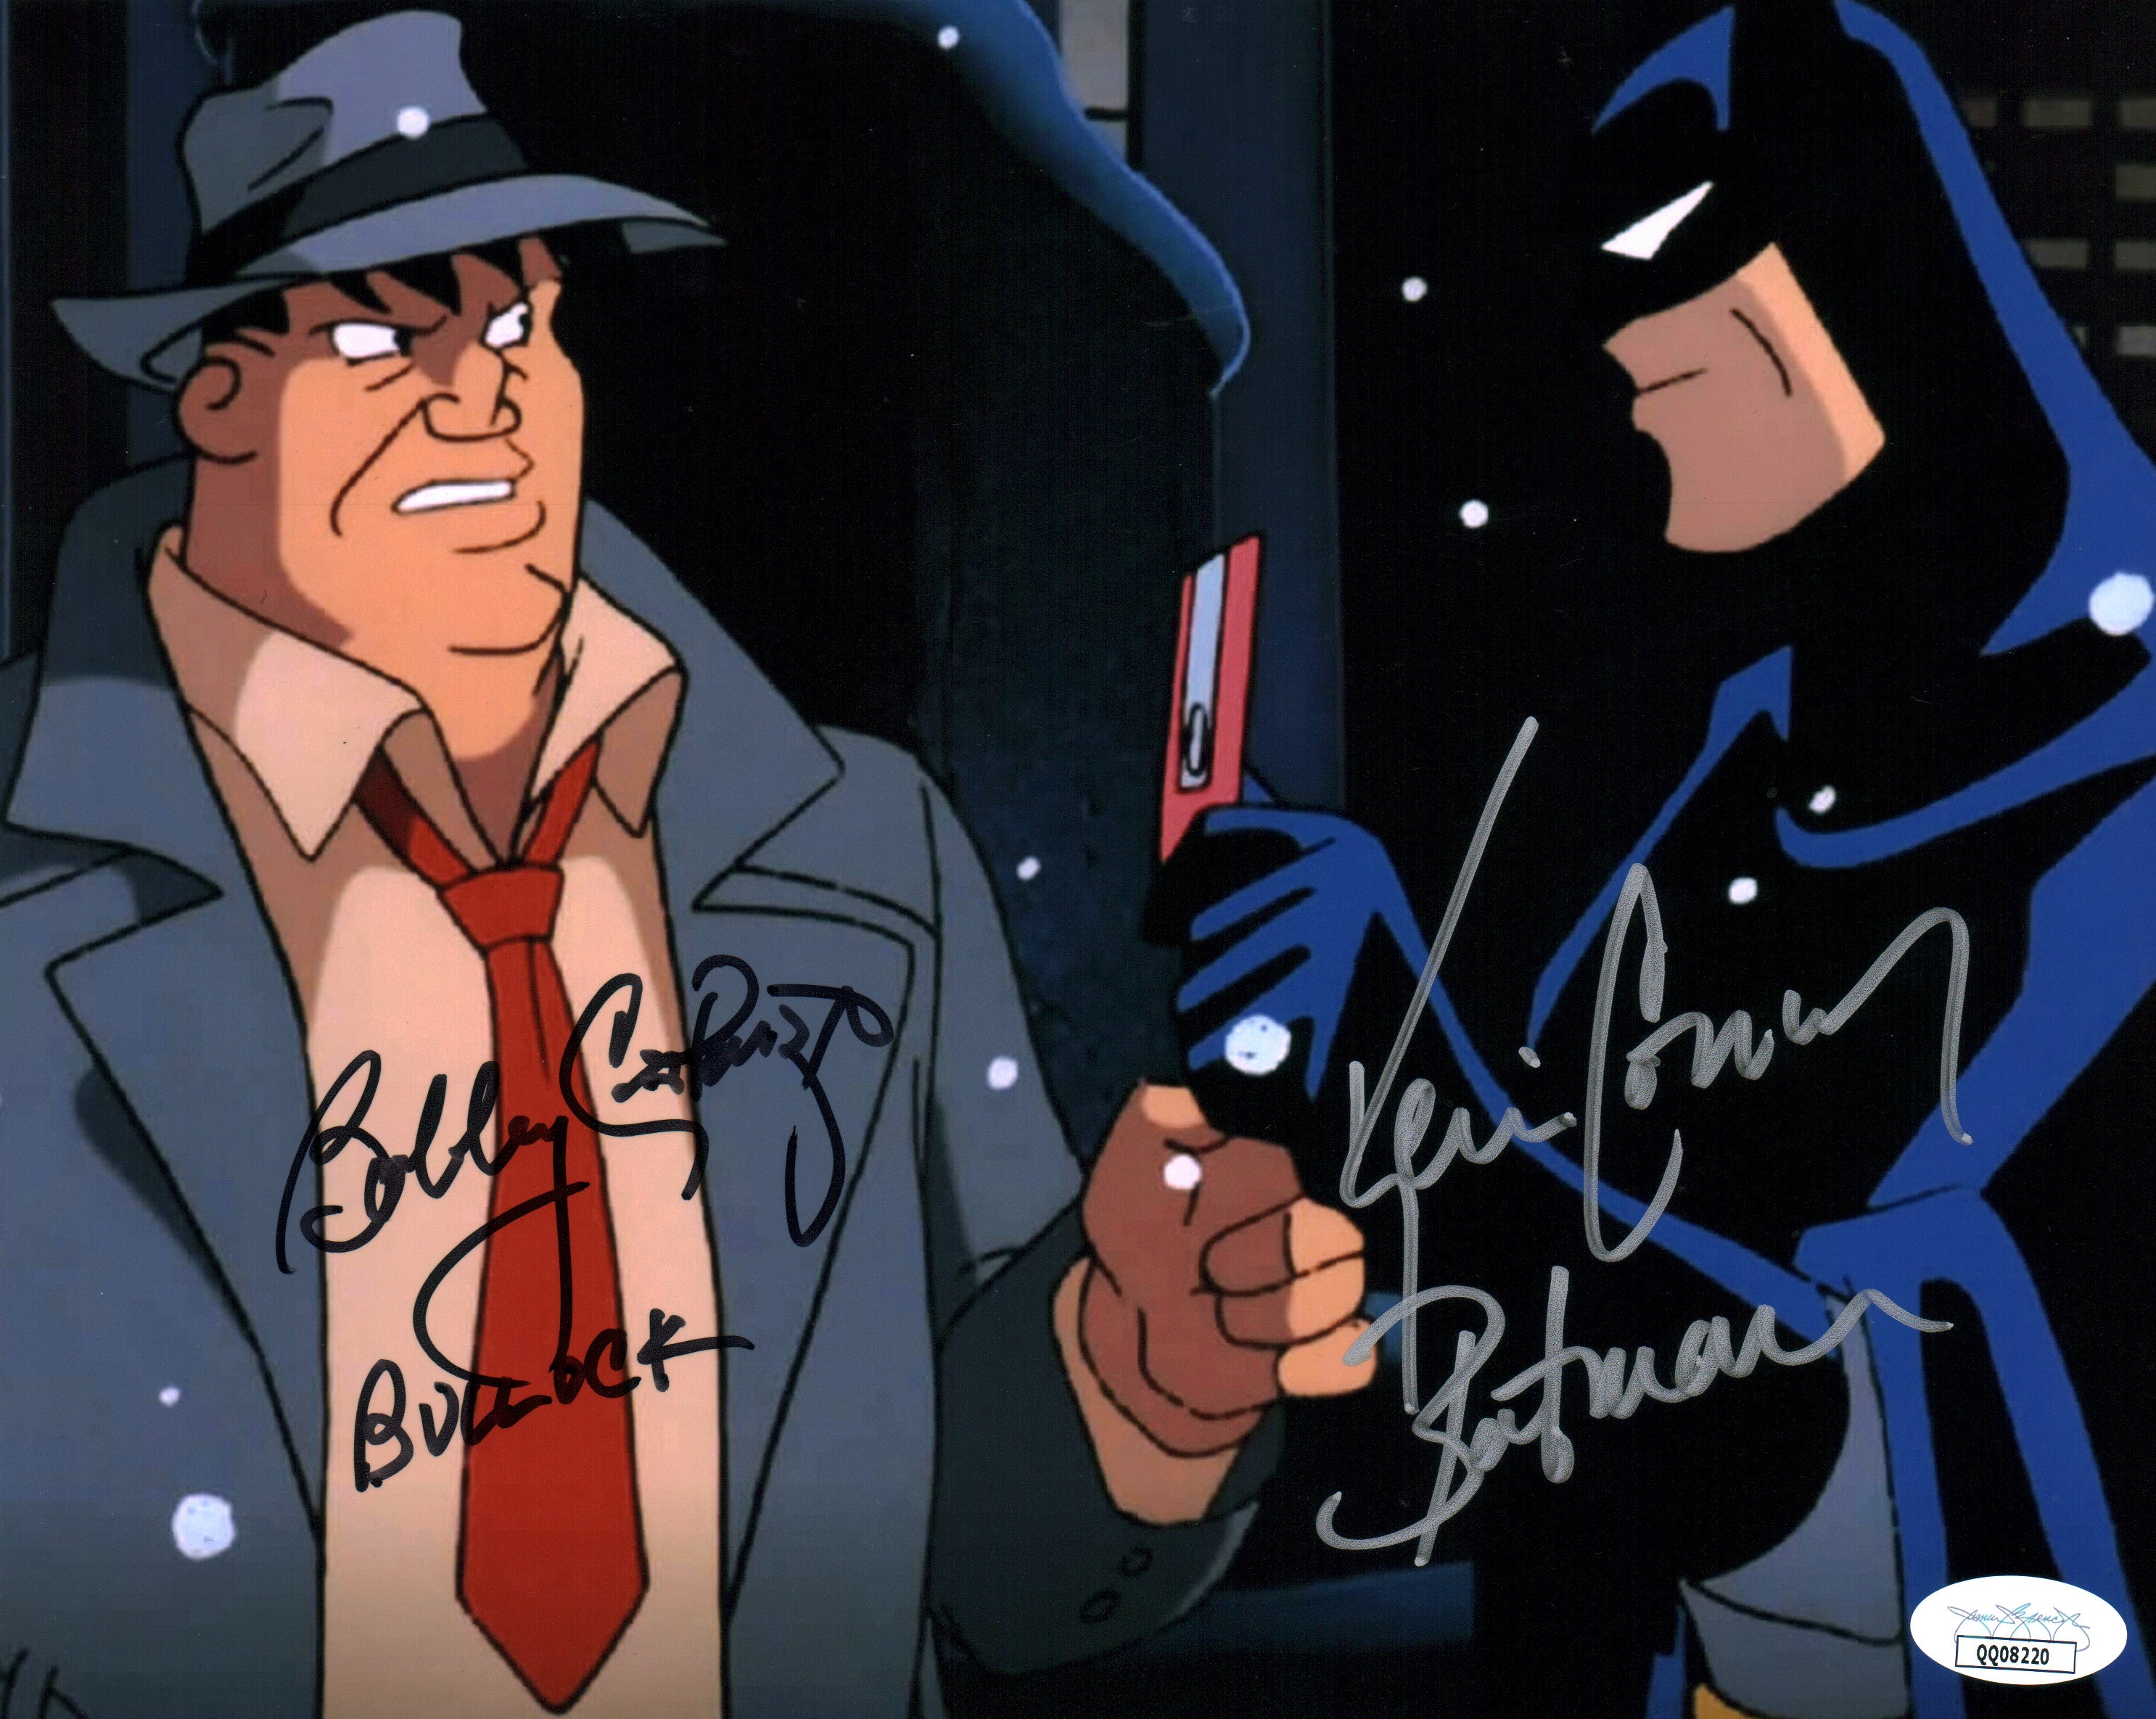 Batman Animated 8x10 Signed Photo Conroy Costanzo JSA COA Certified Autograph